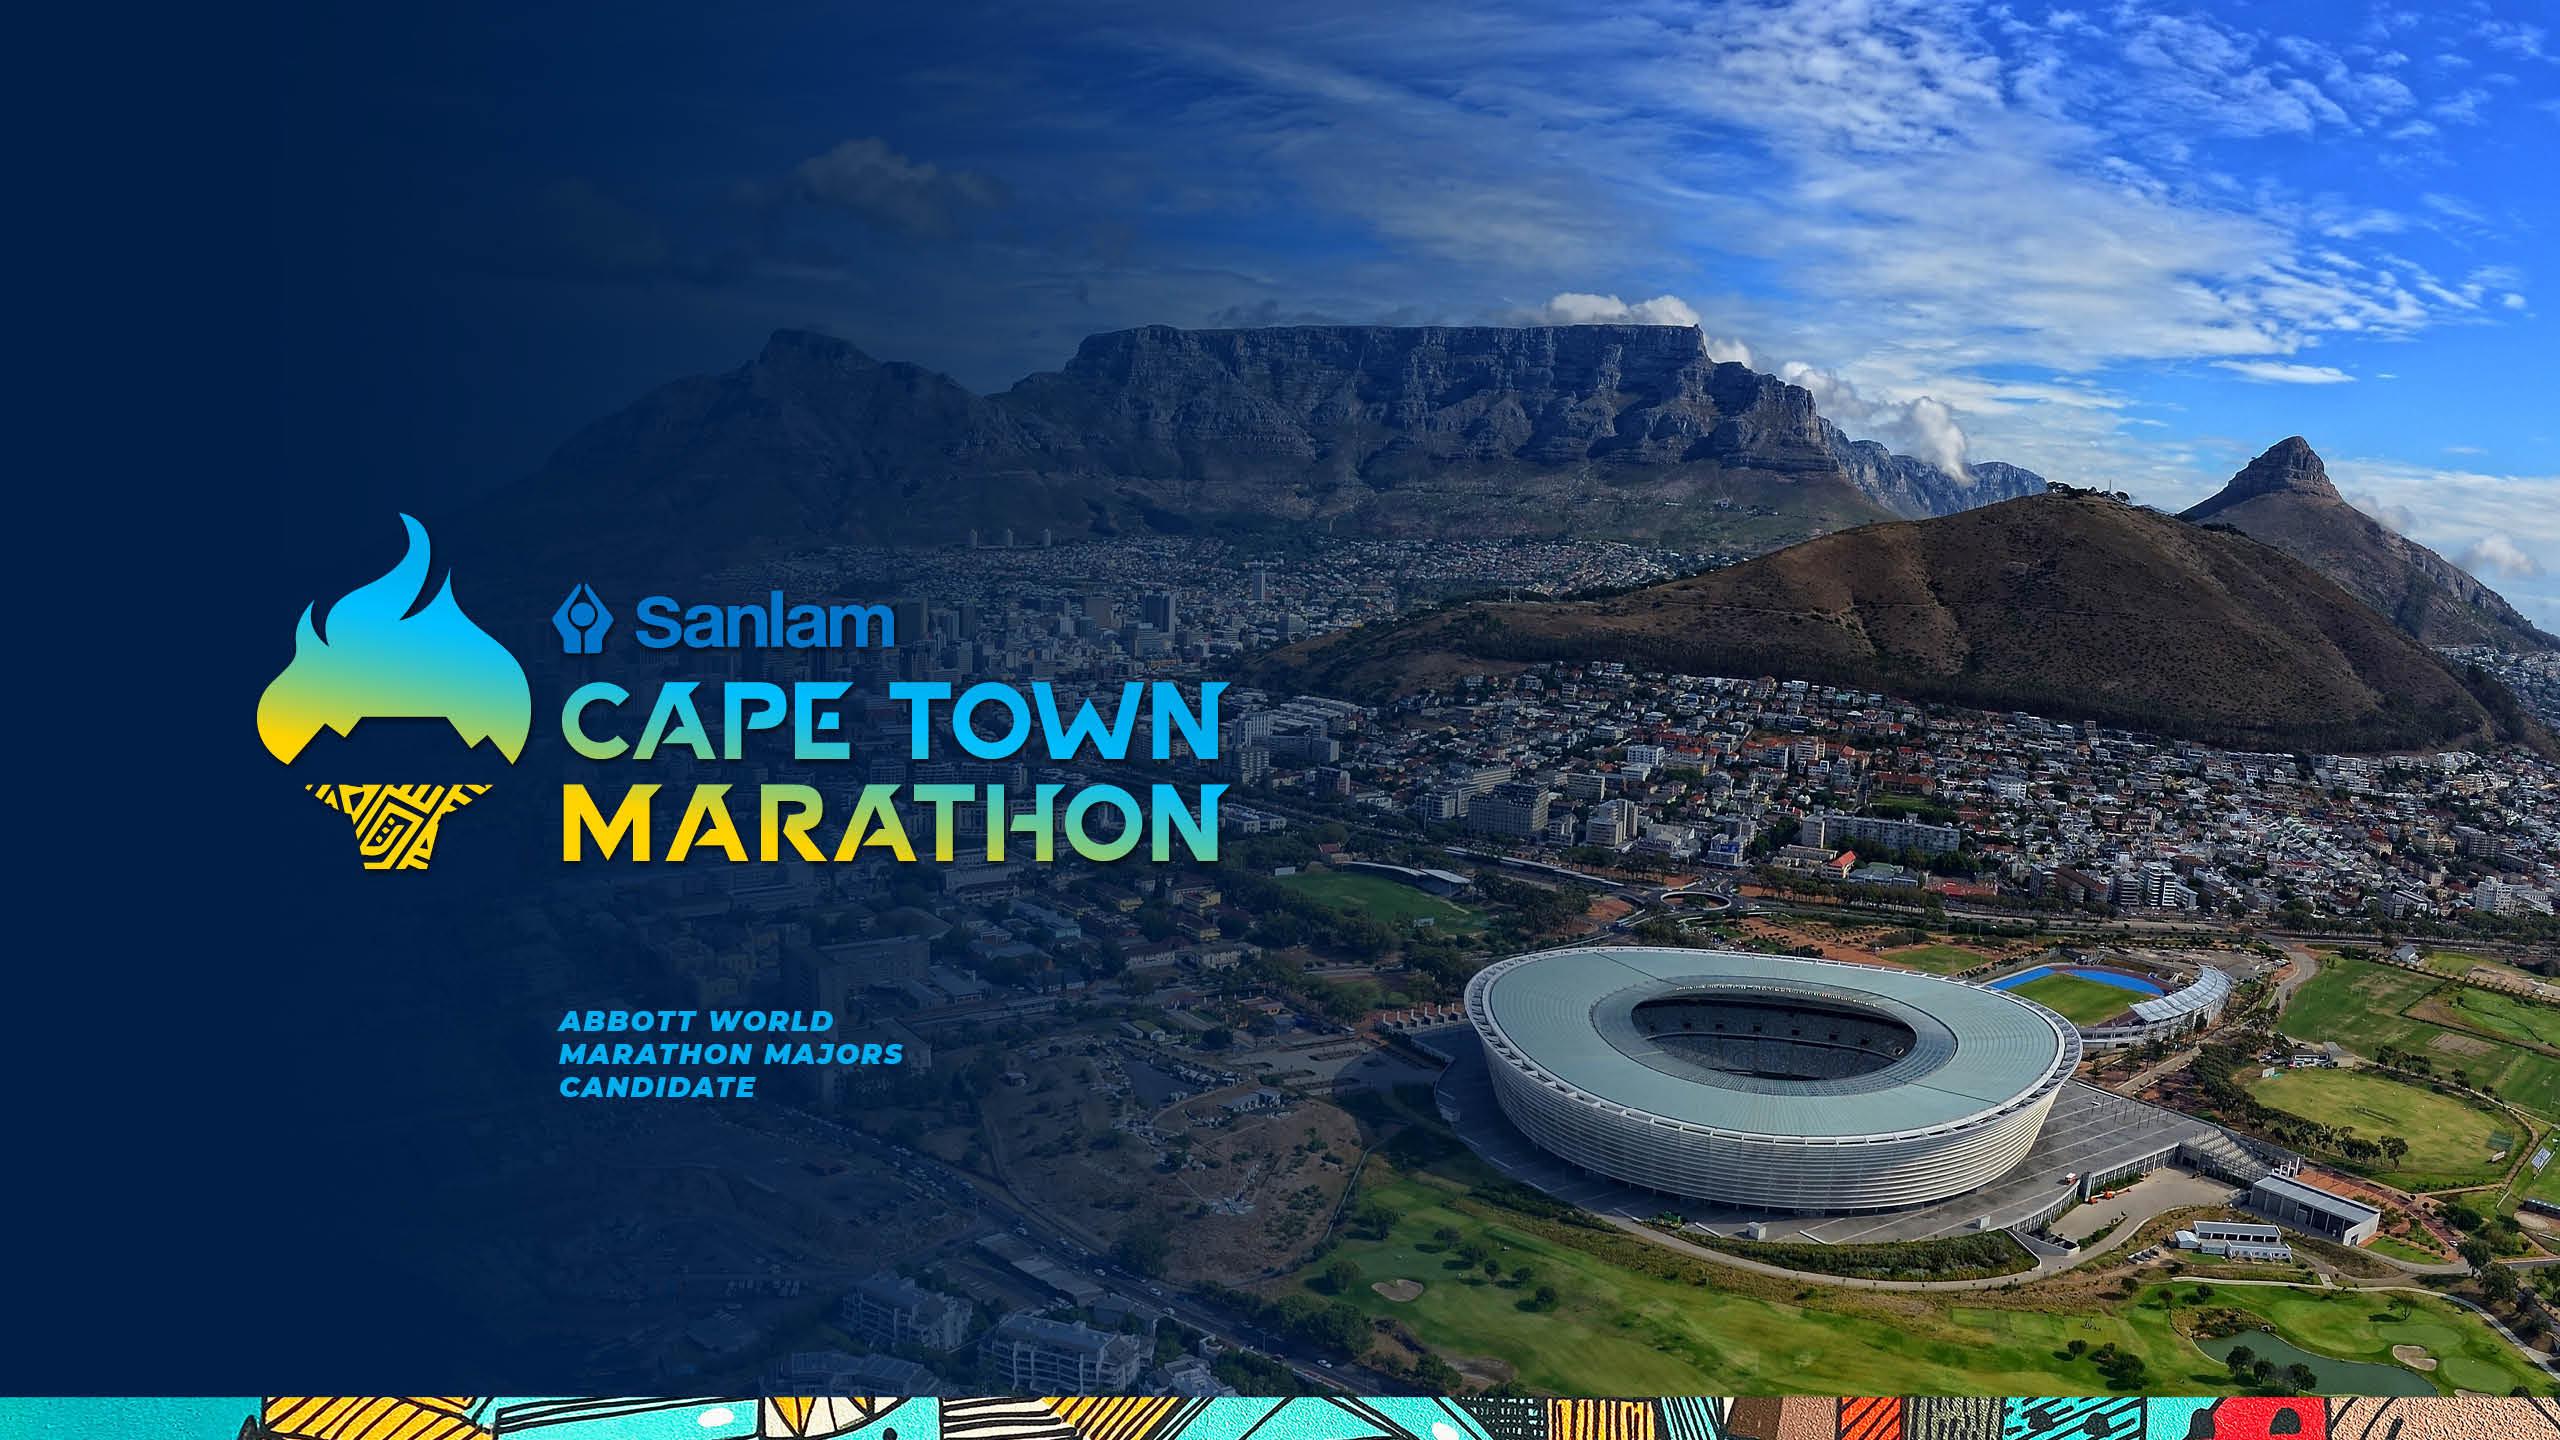 Cape Town Marathon confirms Ernst van Dyk as race ambassador